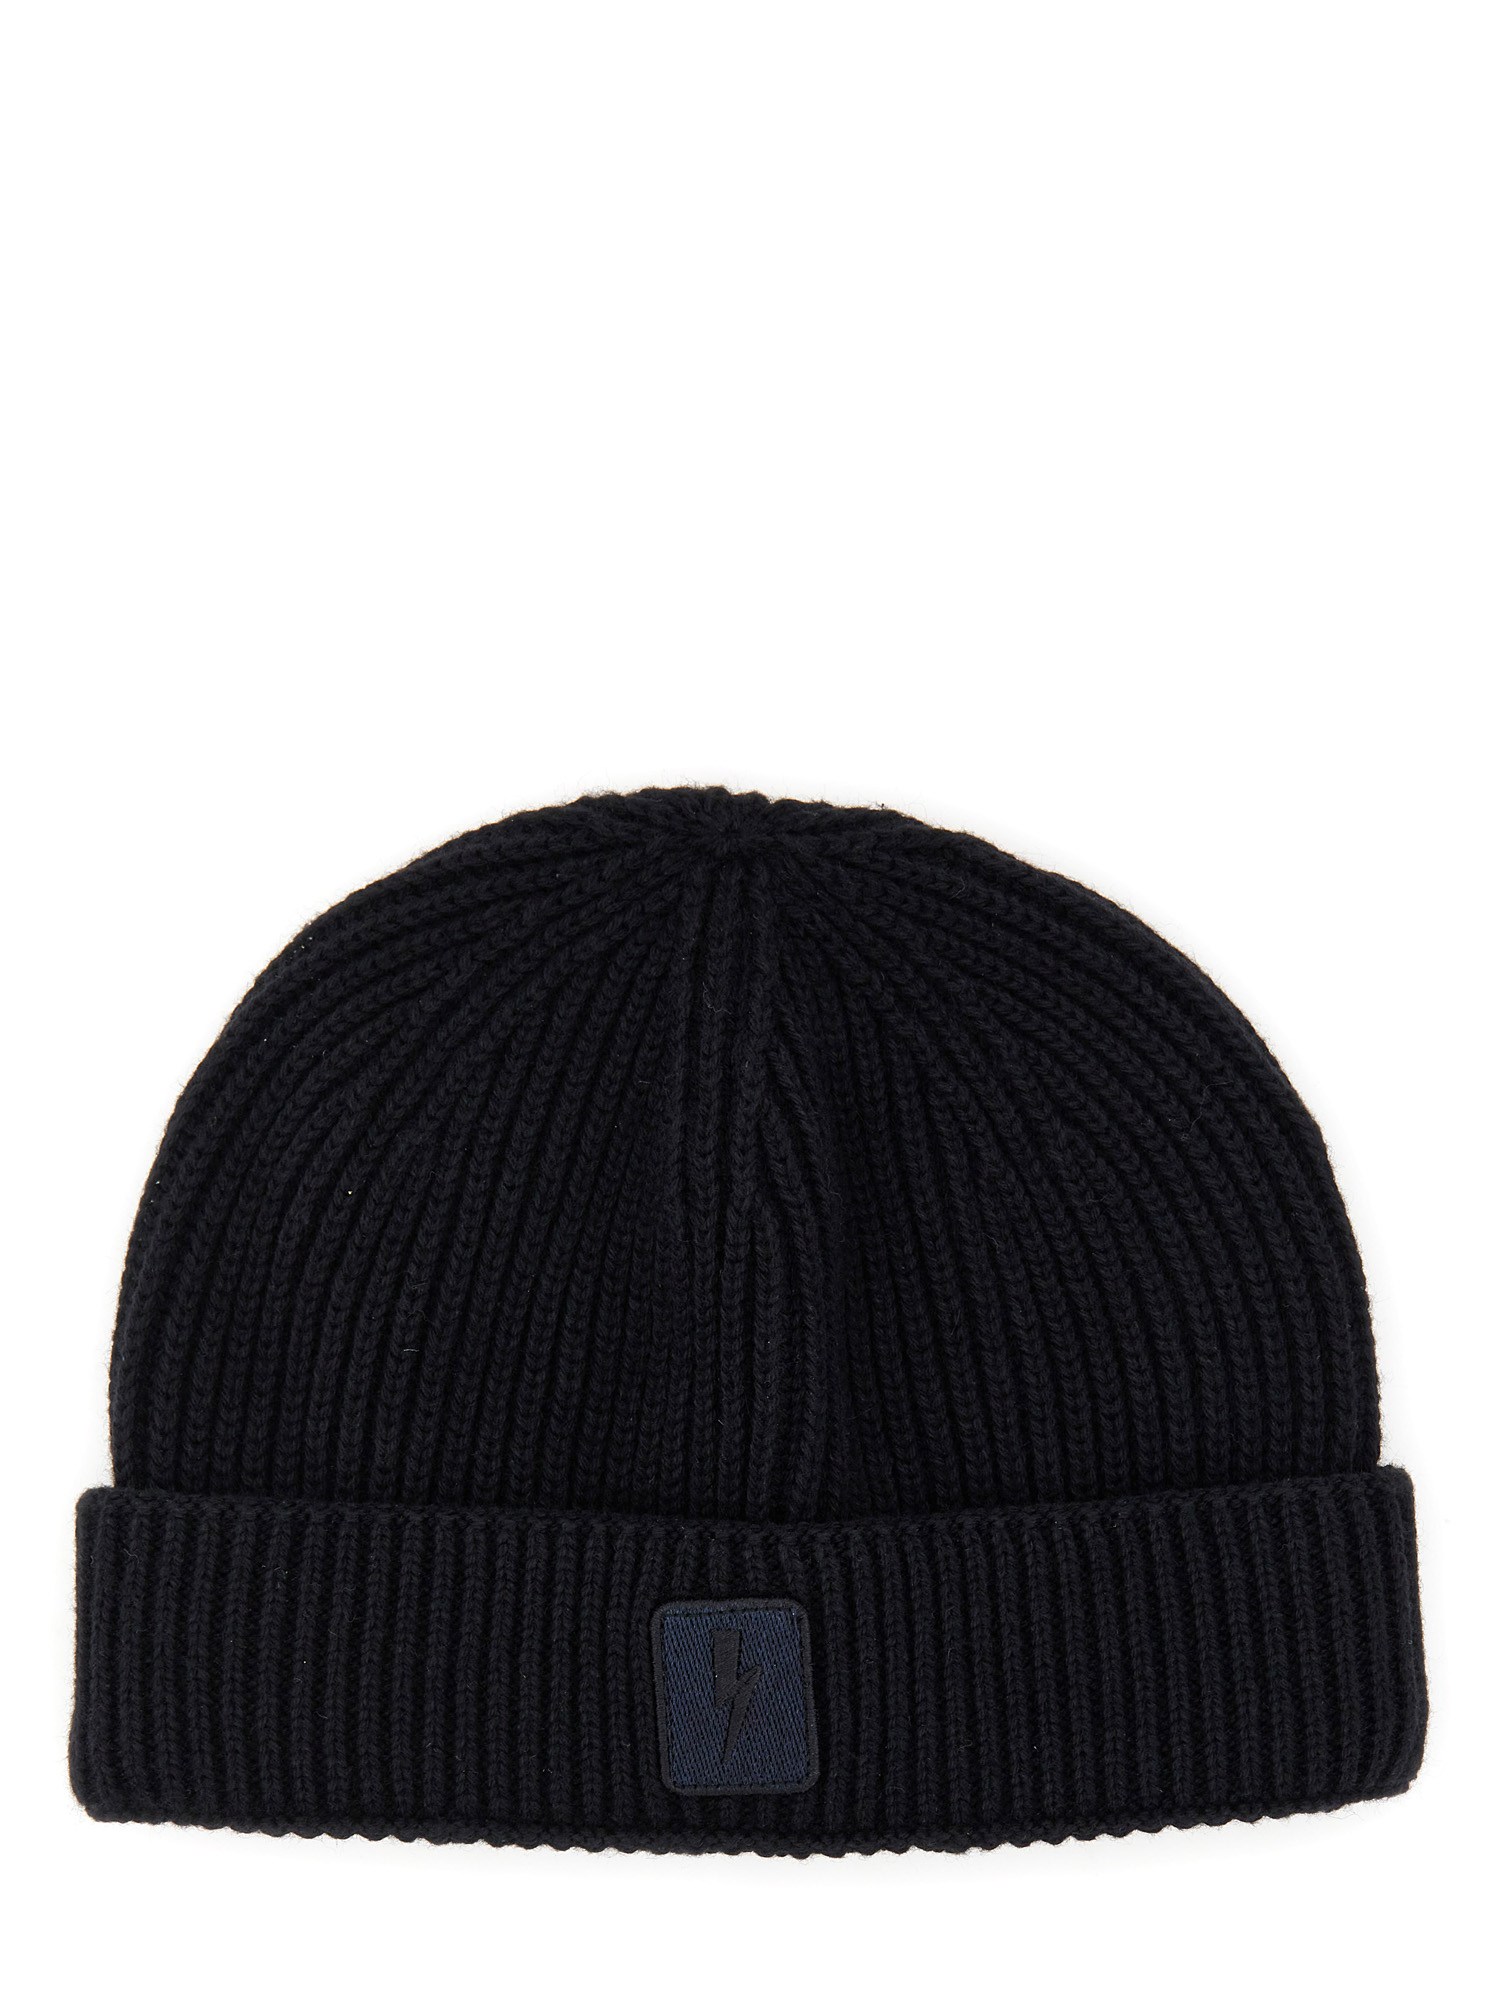 neil barrett beanie hat with logo